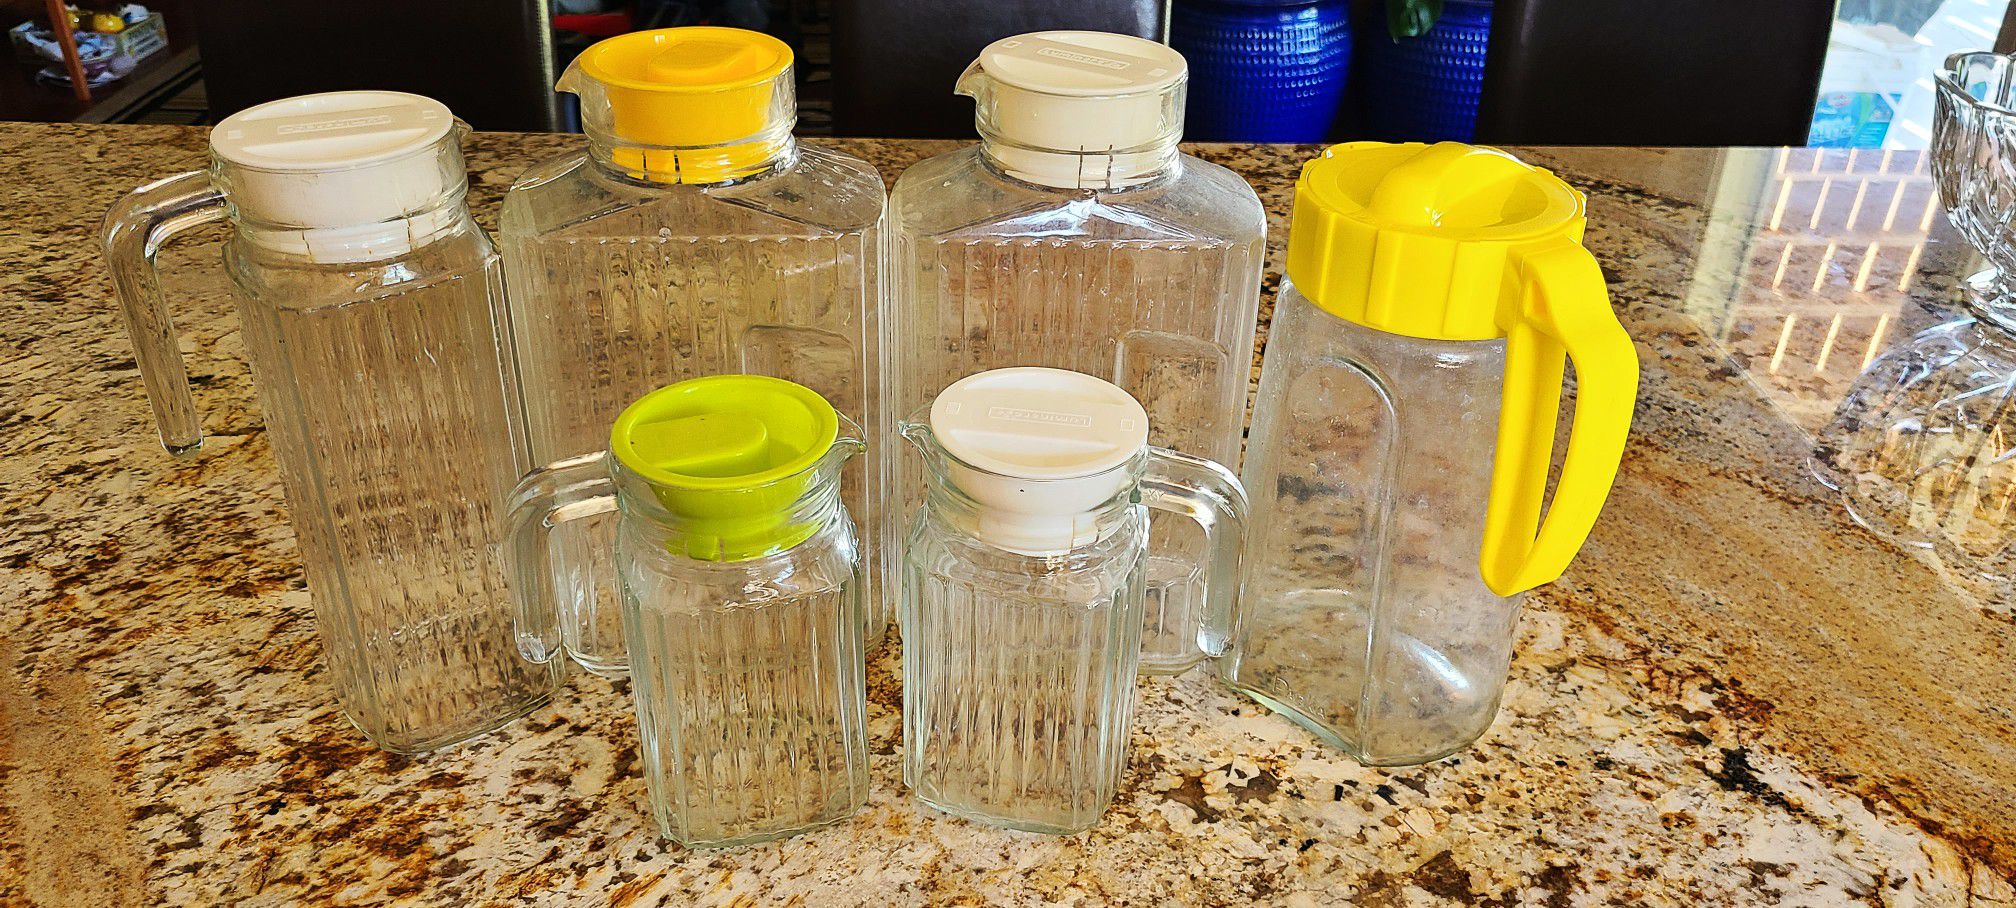 6 glass pitchers